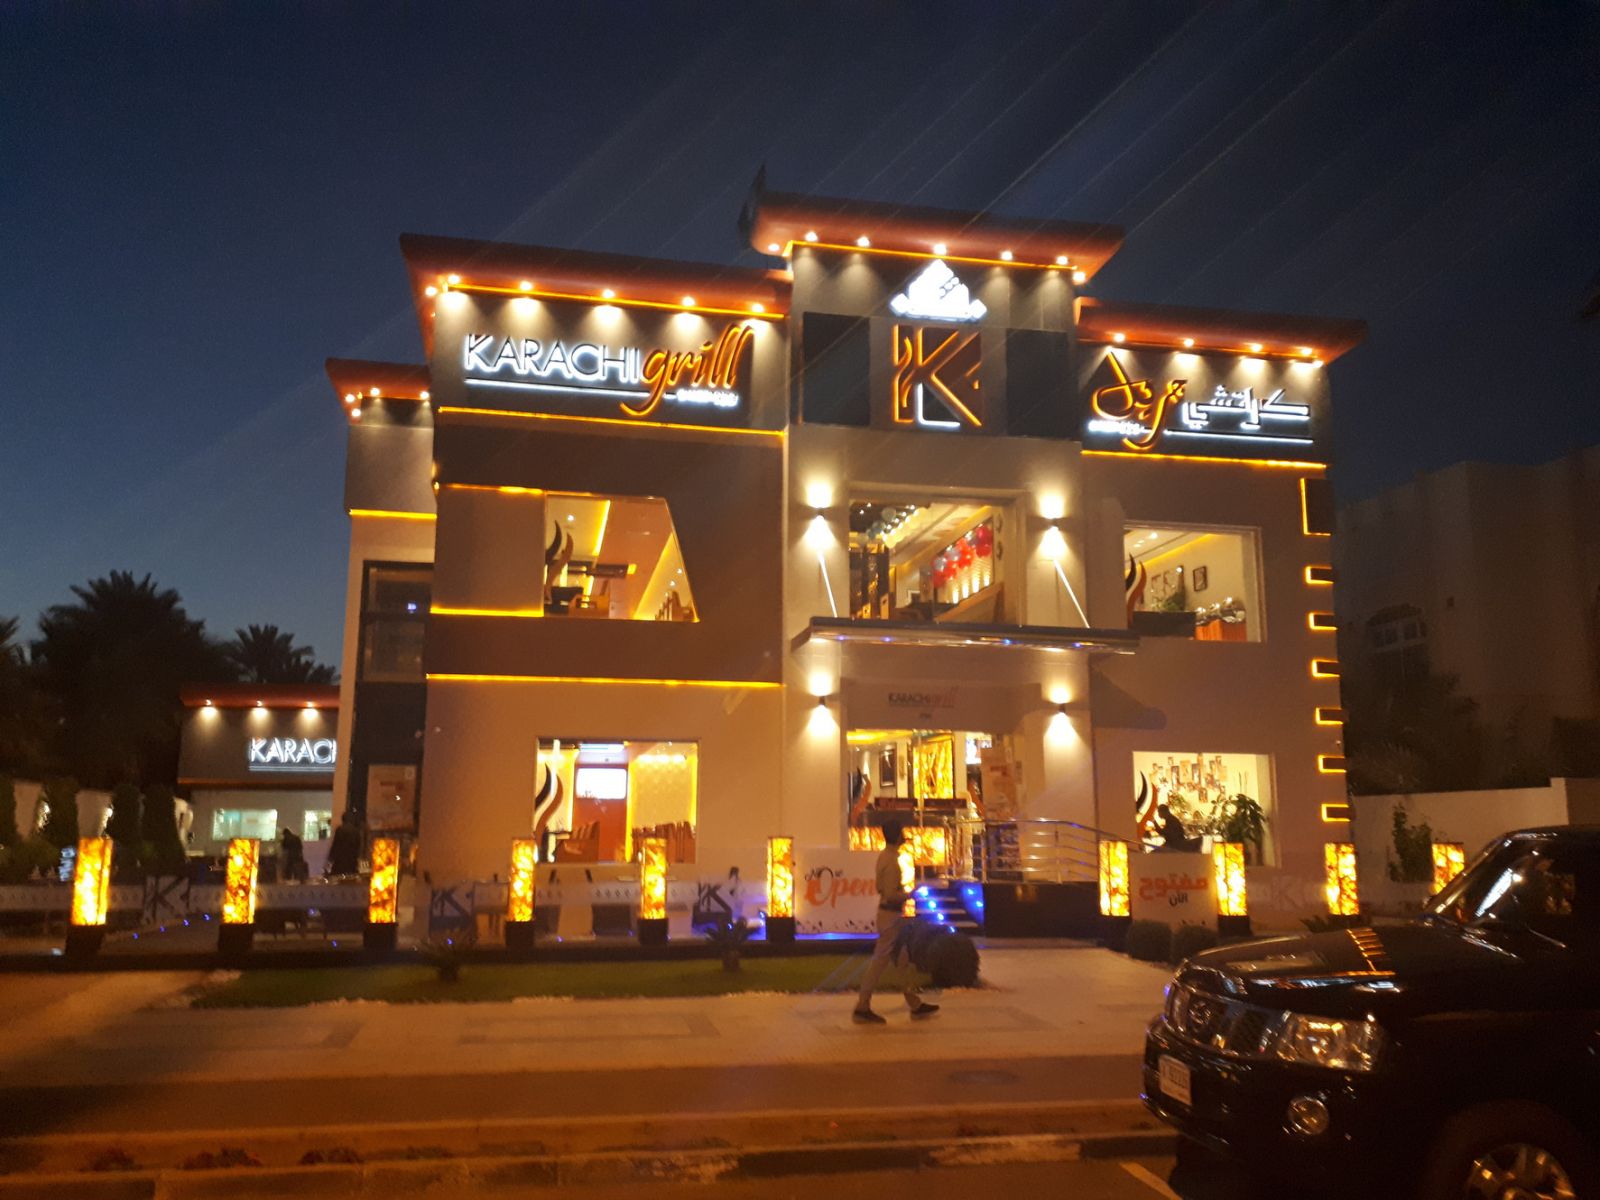 Karachi Grill Restaurant